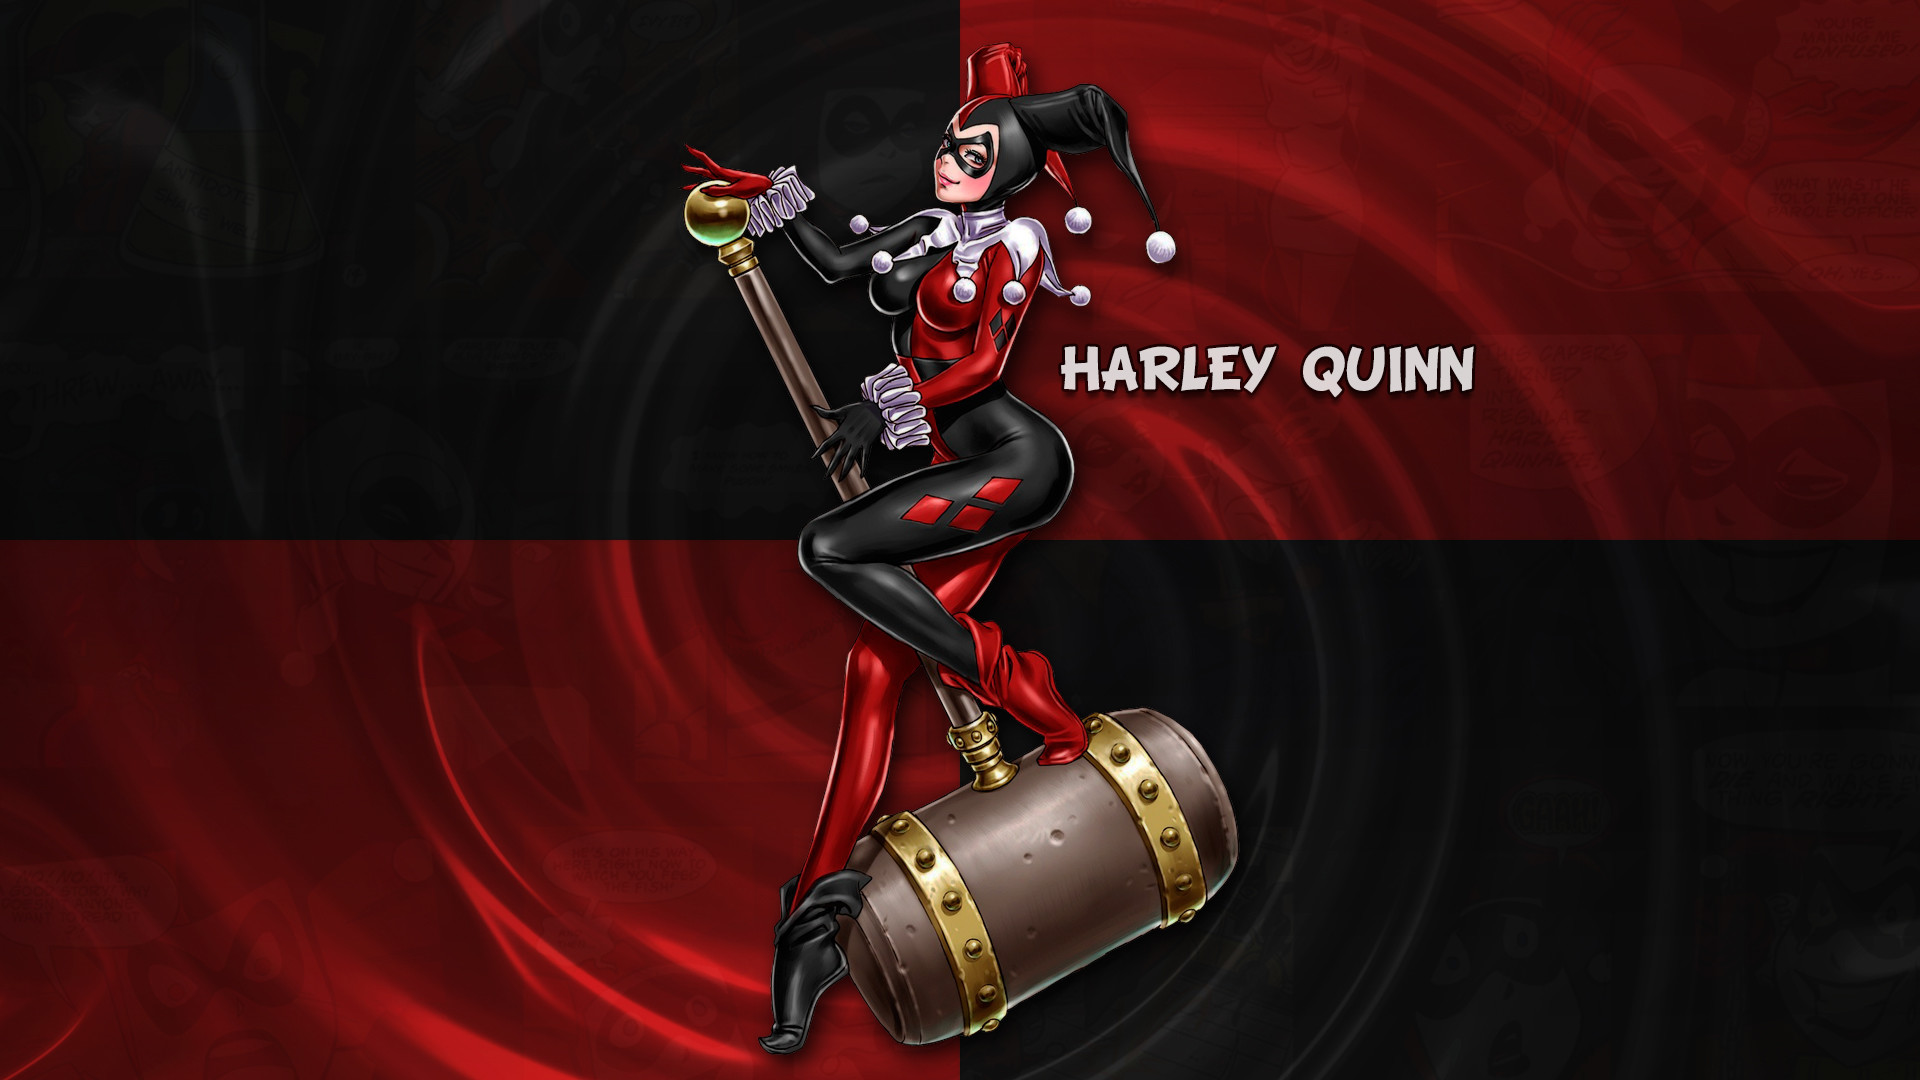 Harley quinn deadpool fan images